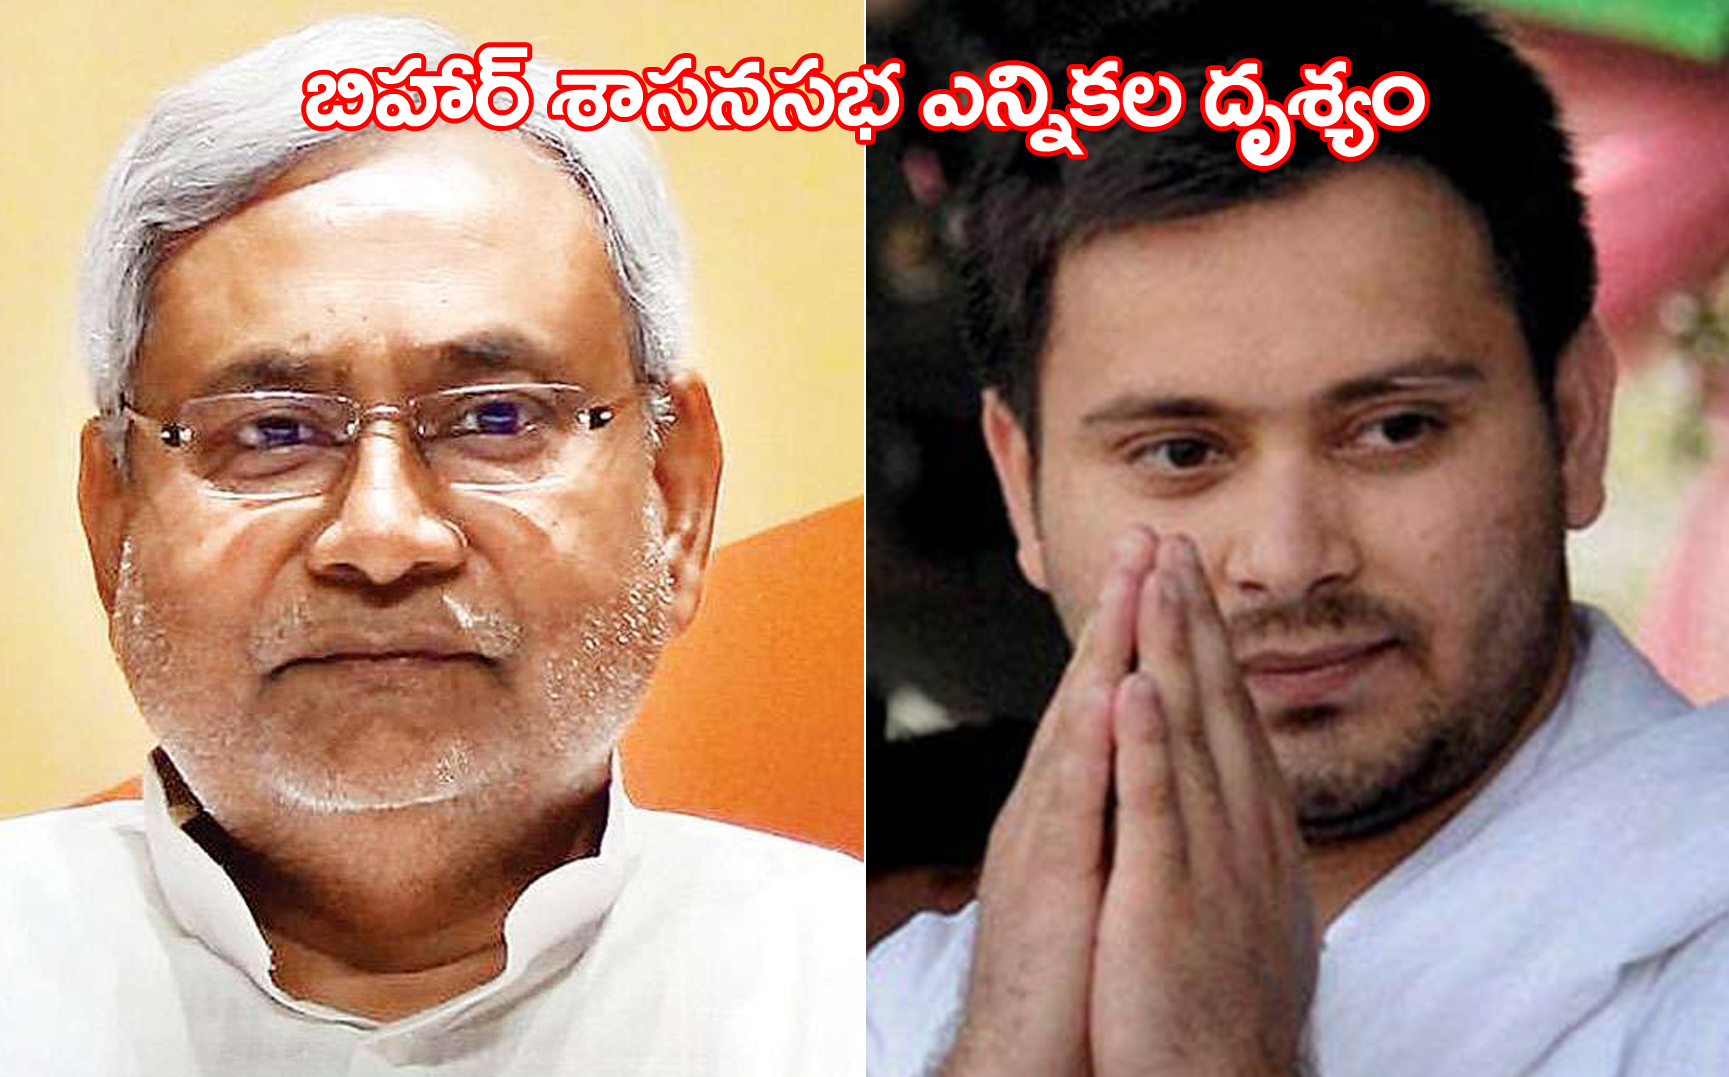 Bihar Polls: Will it be Nitish Kumar again or Tejashwi yadav for a change?